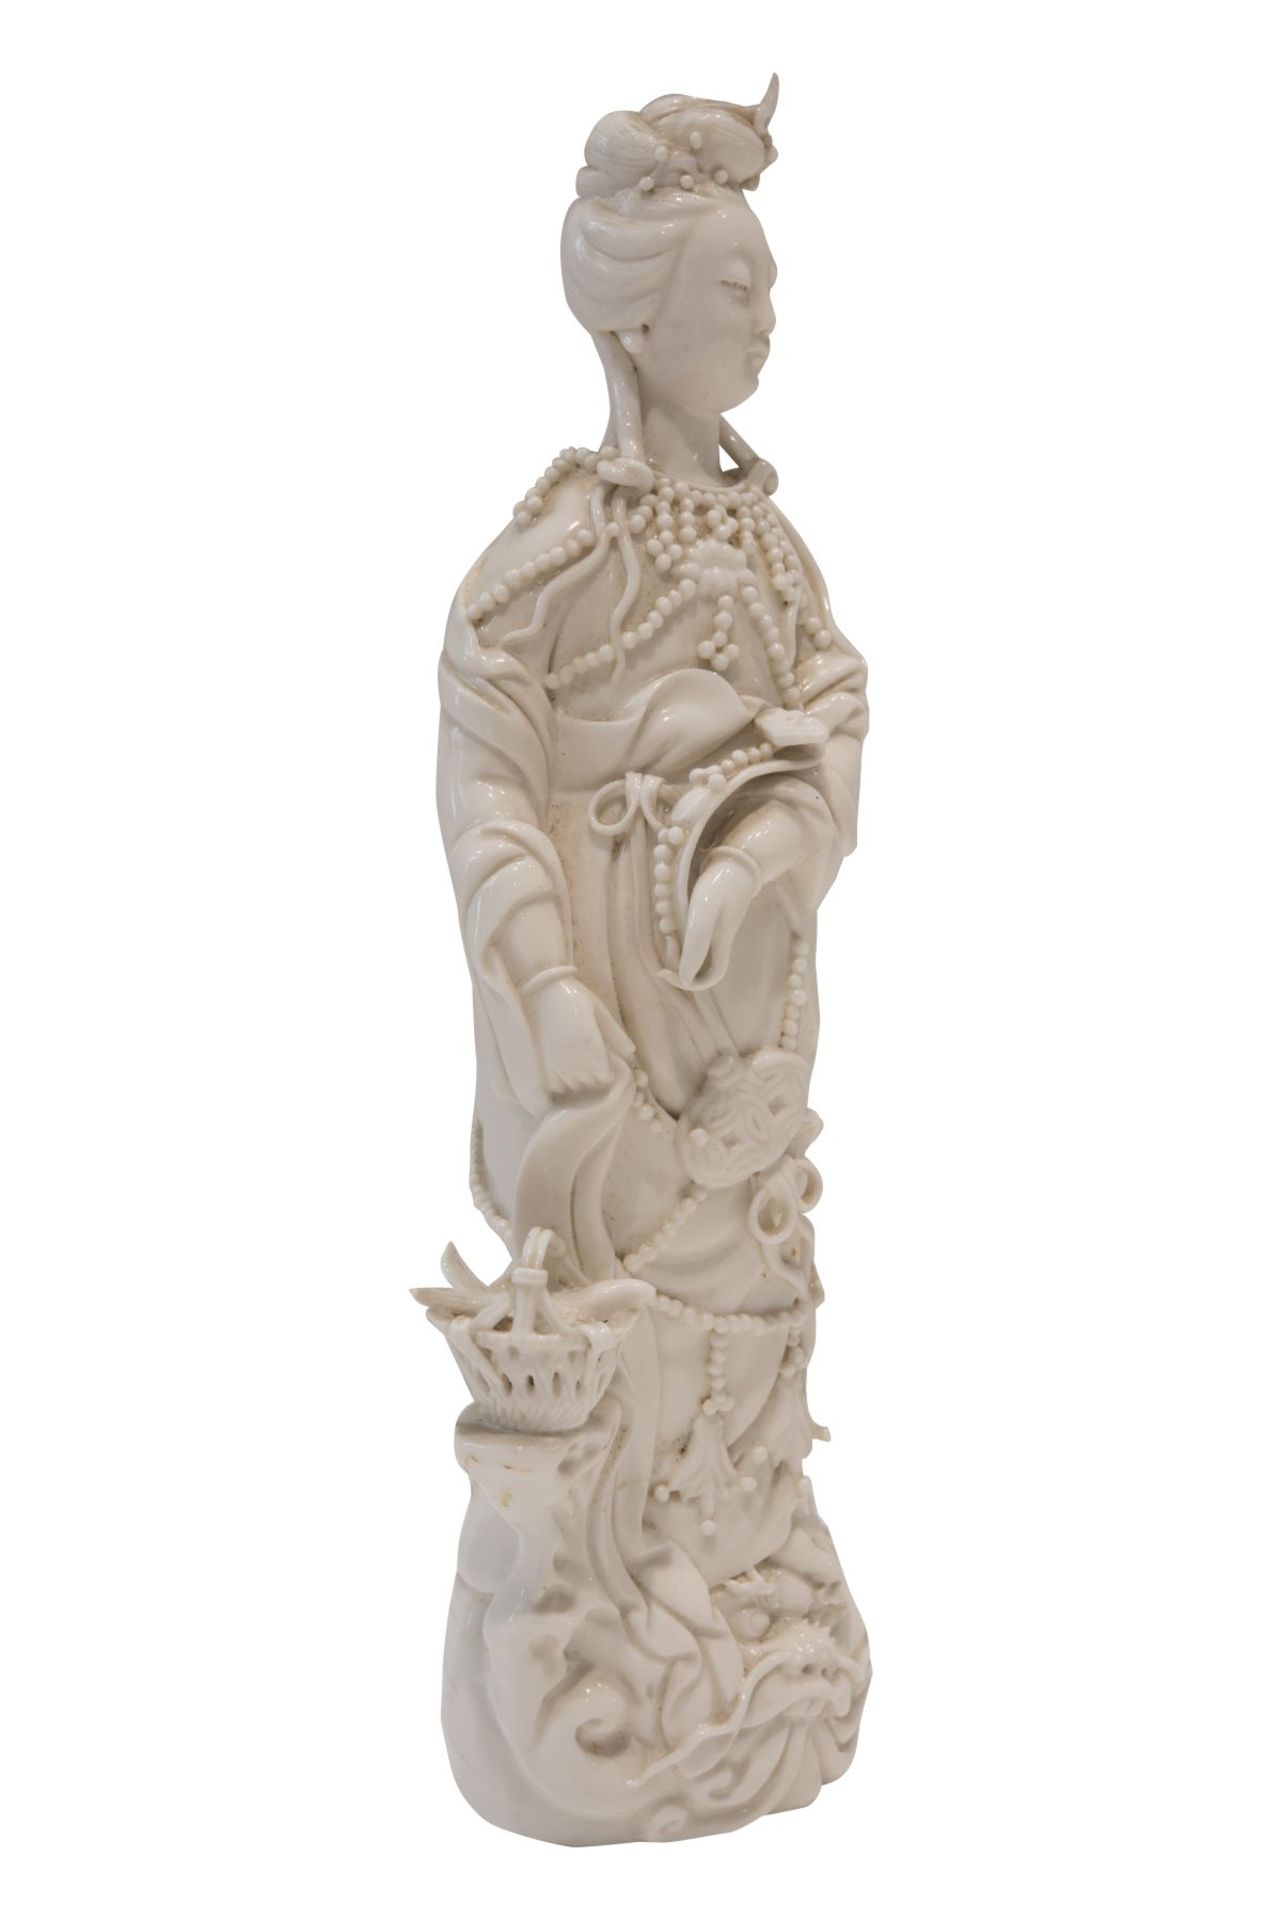 Blanc de Chine "Guanyin", porcelain figure - Image 5 of 6